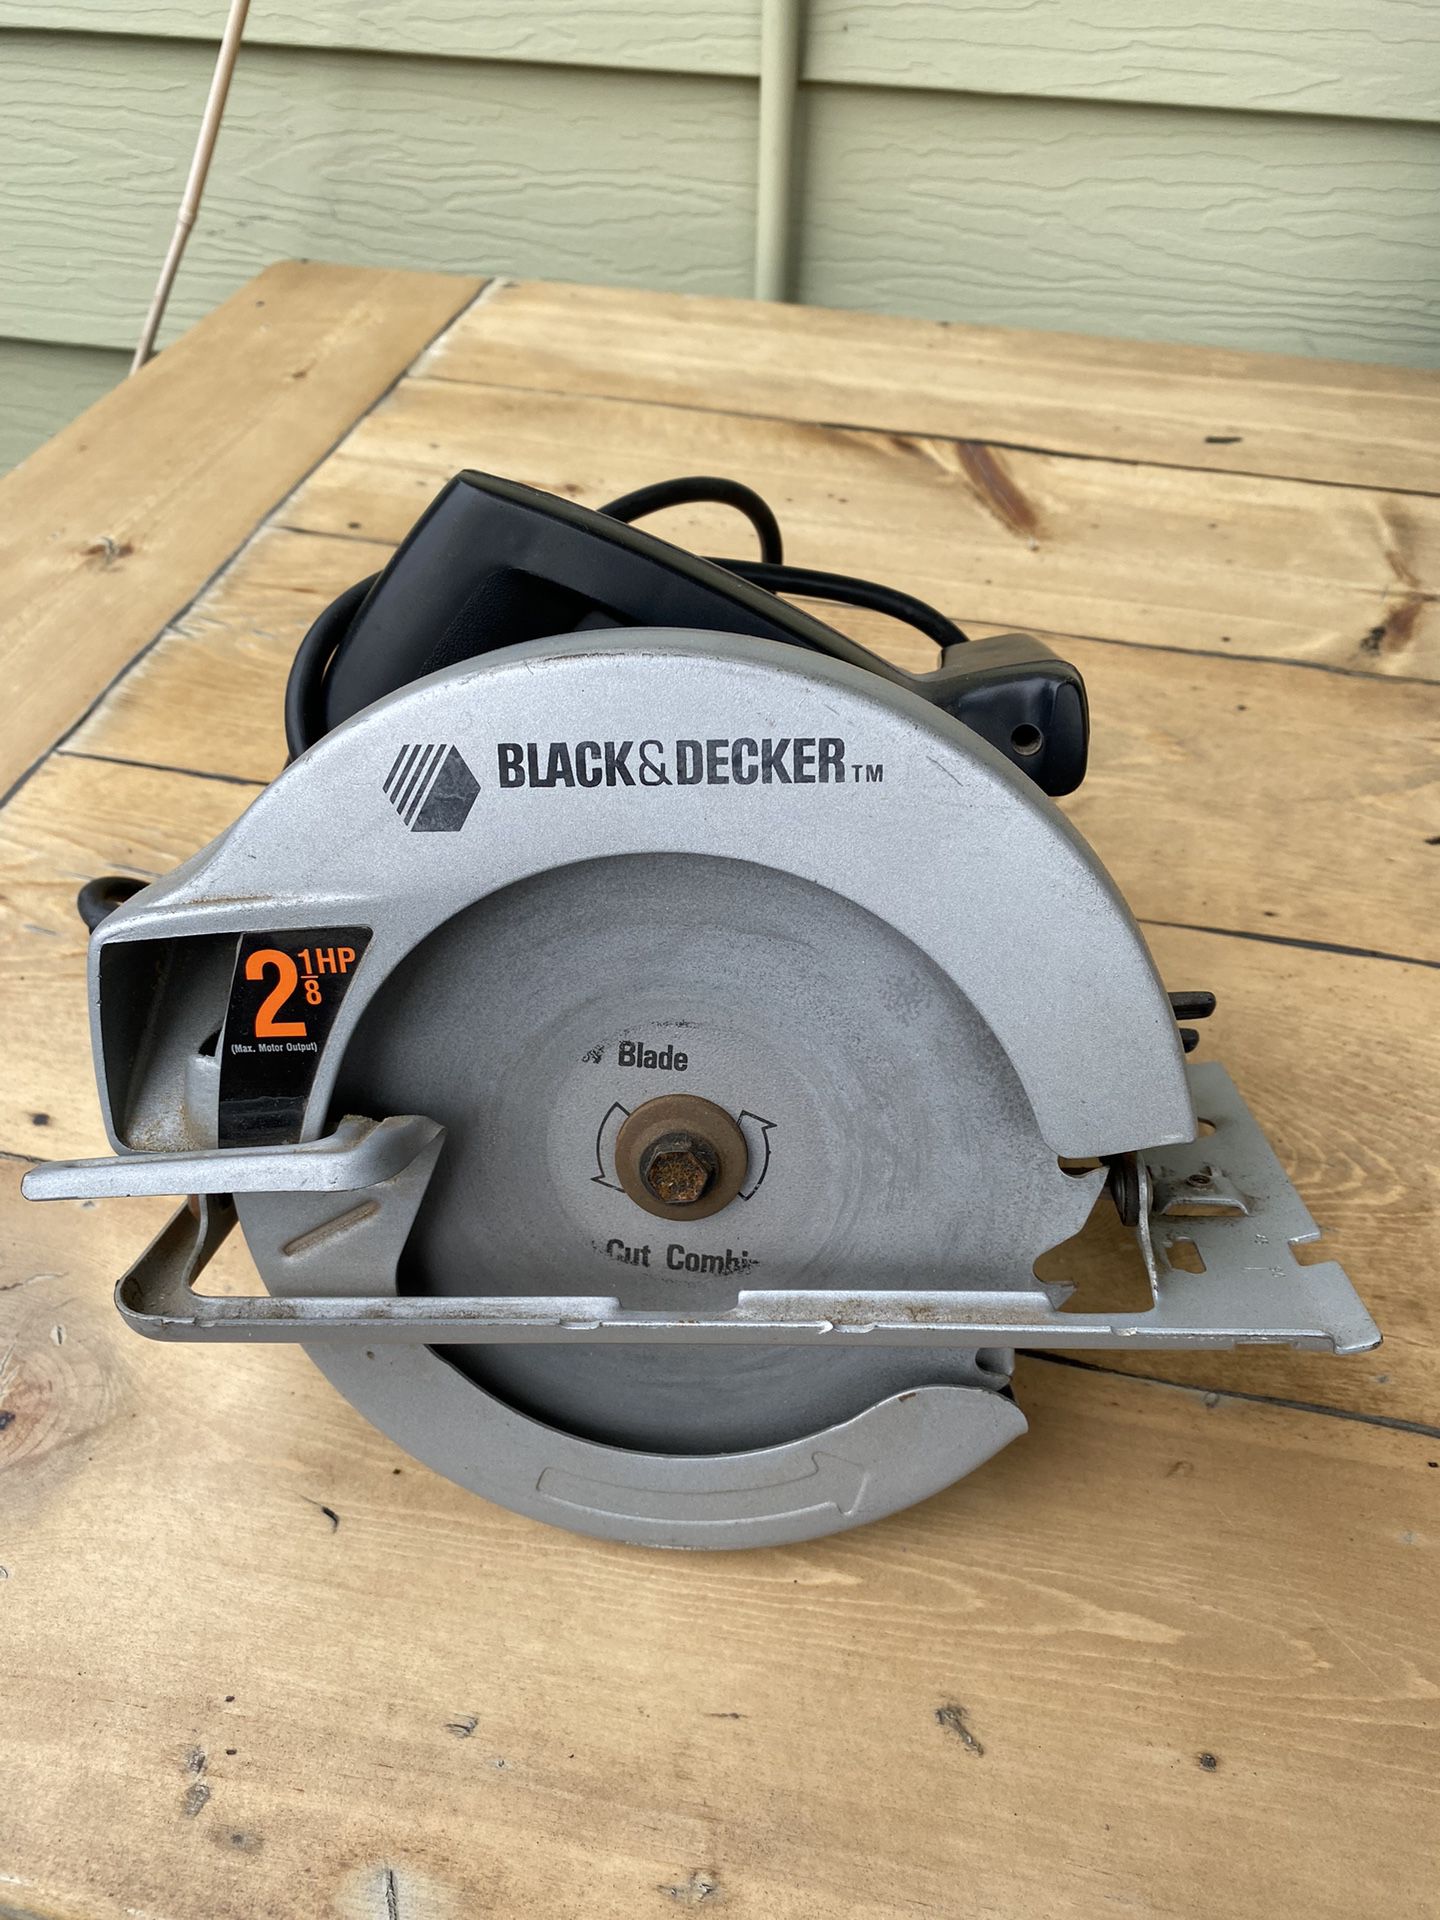 Black & Decker 2 1/8 HP Circular Saw for Sale in San Jose, CA